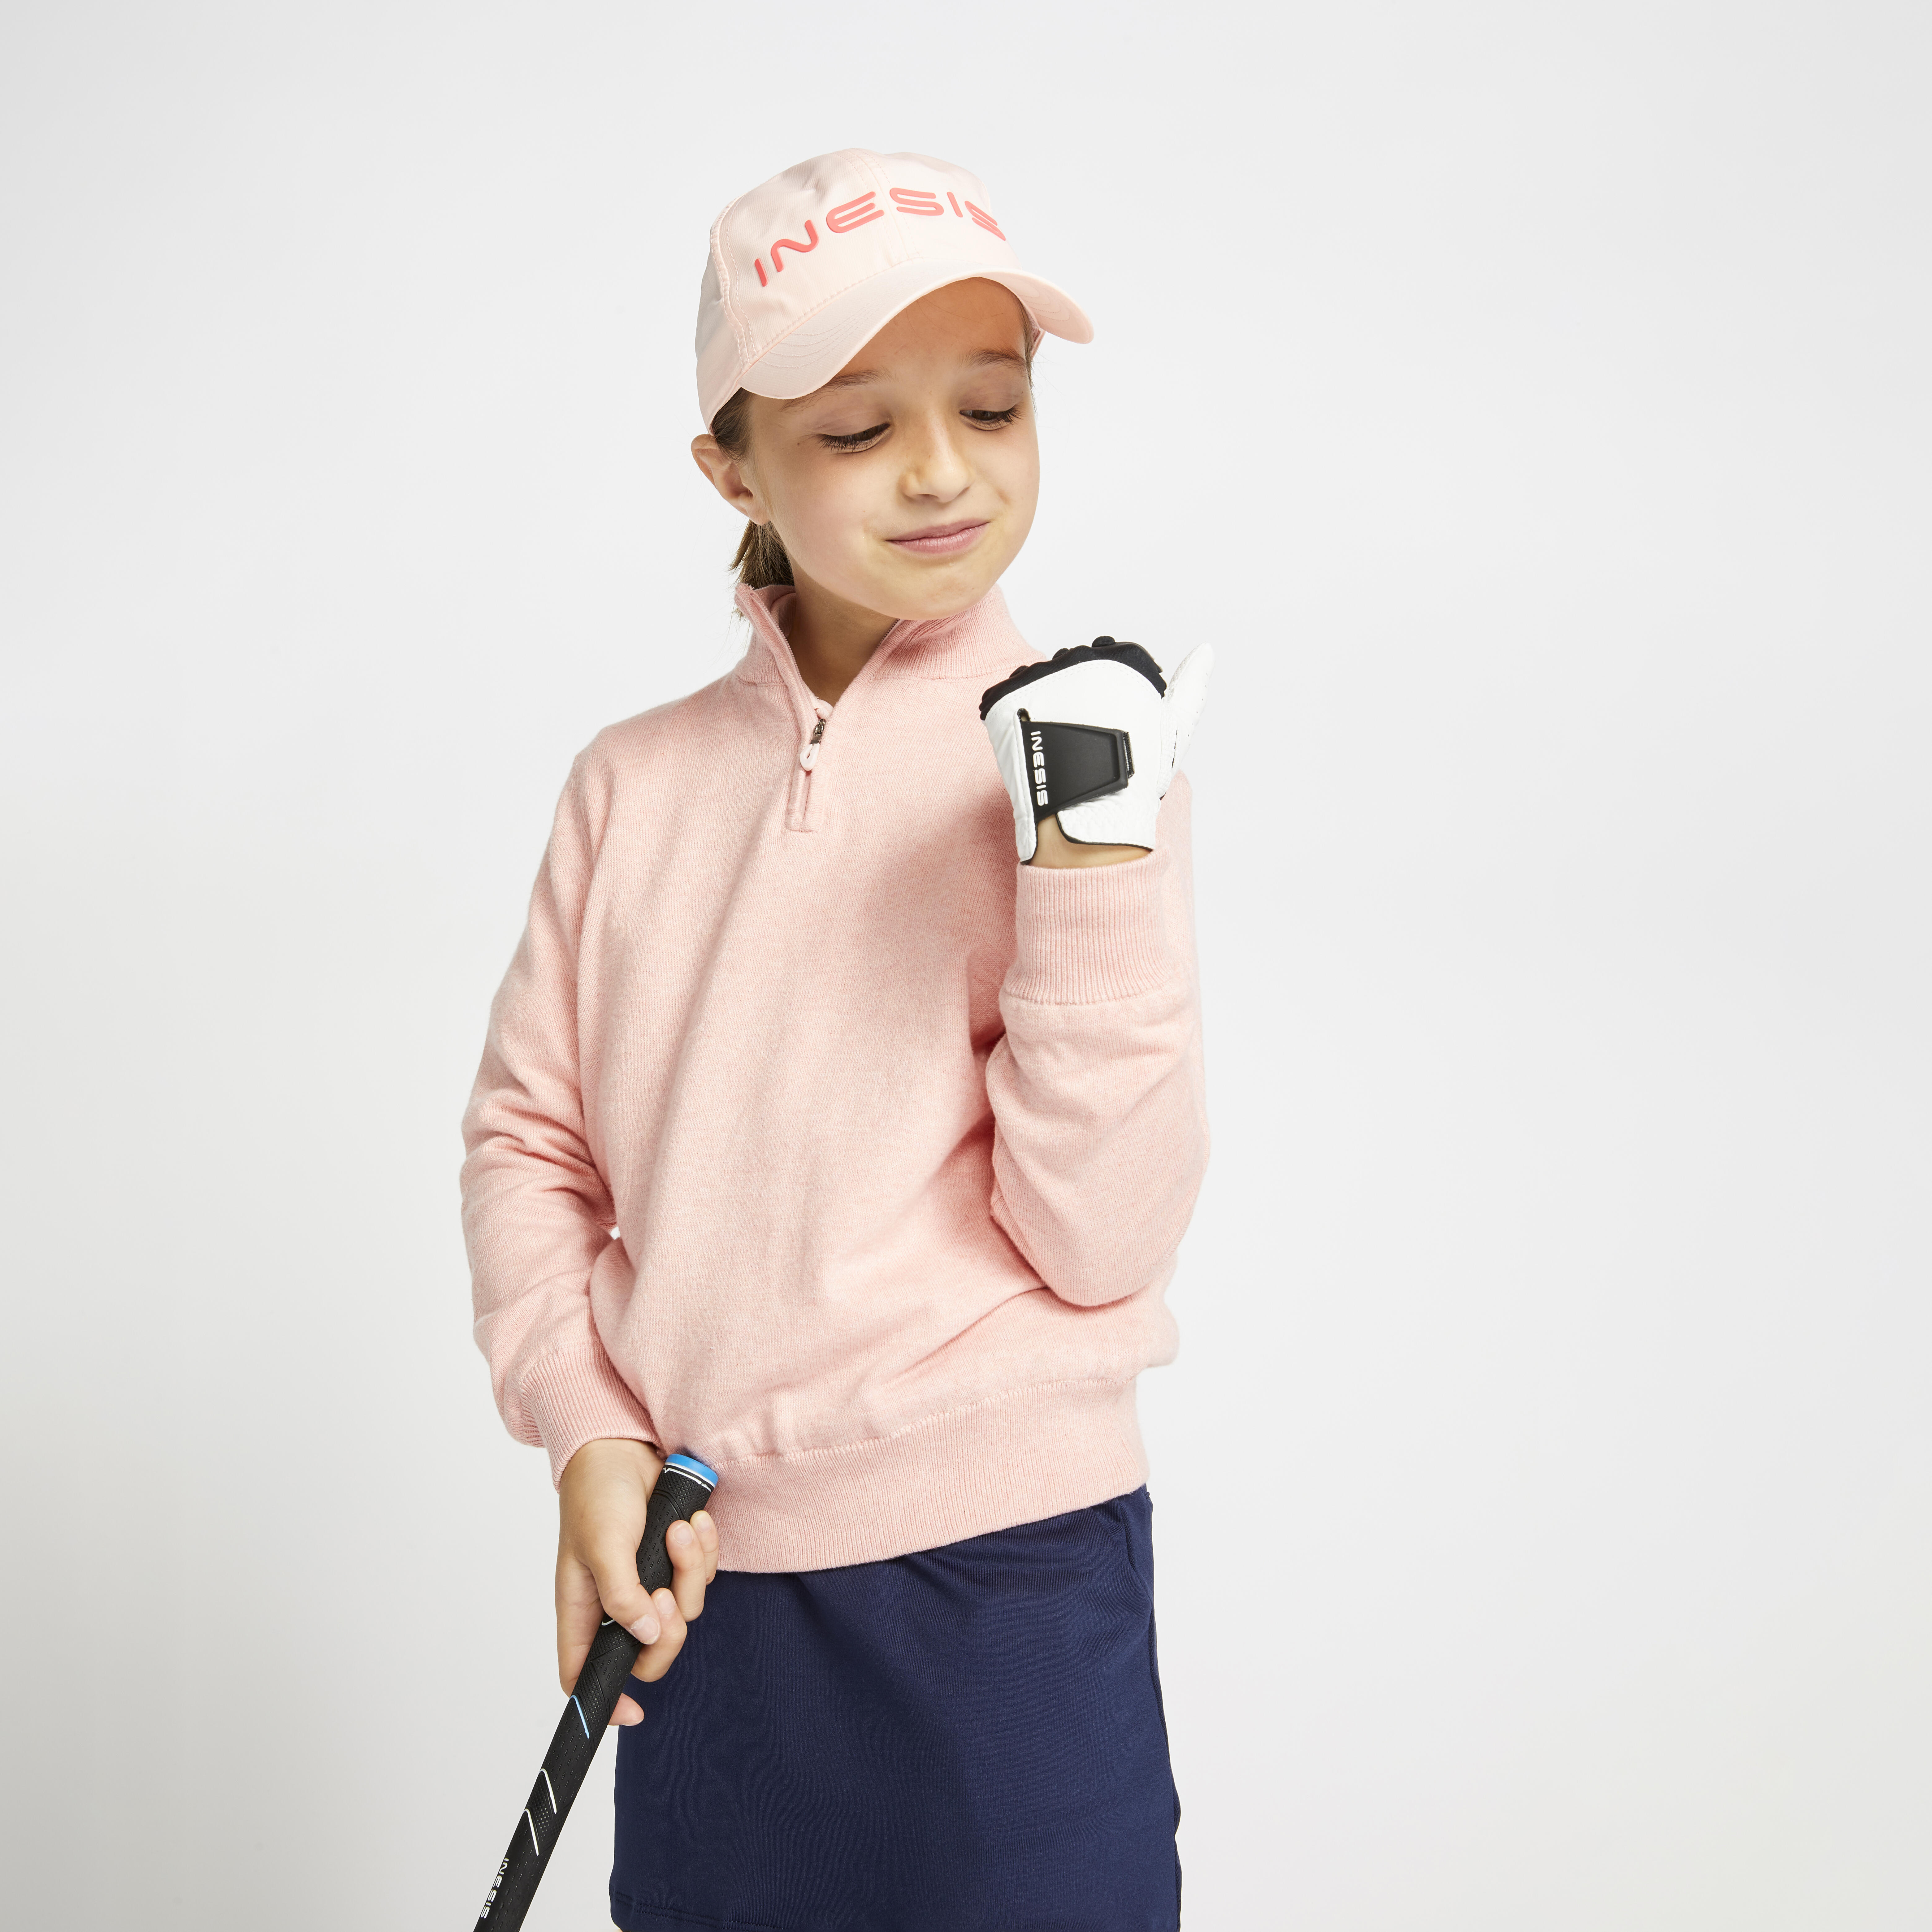 Zane - Youth Boys 5-Pocket Golf Pants - Shop Boys Golf Apparel Online | Garb